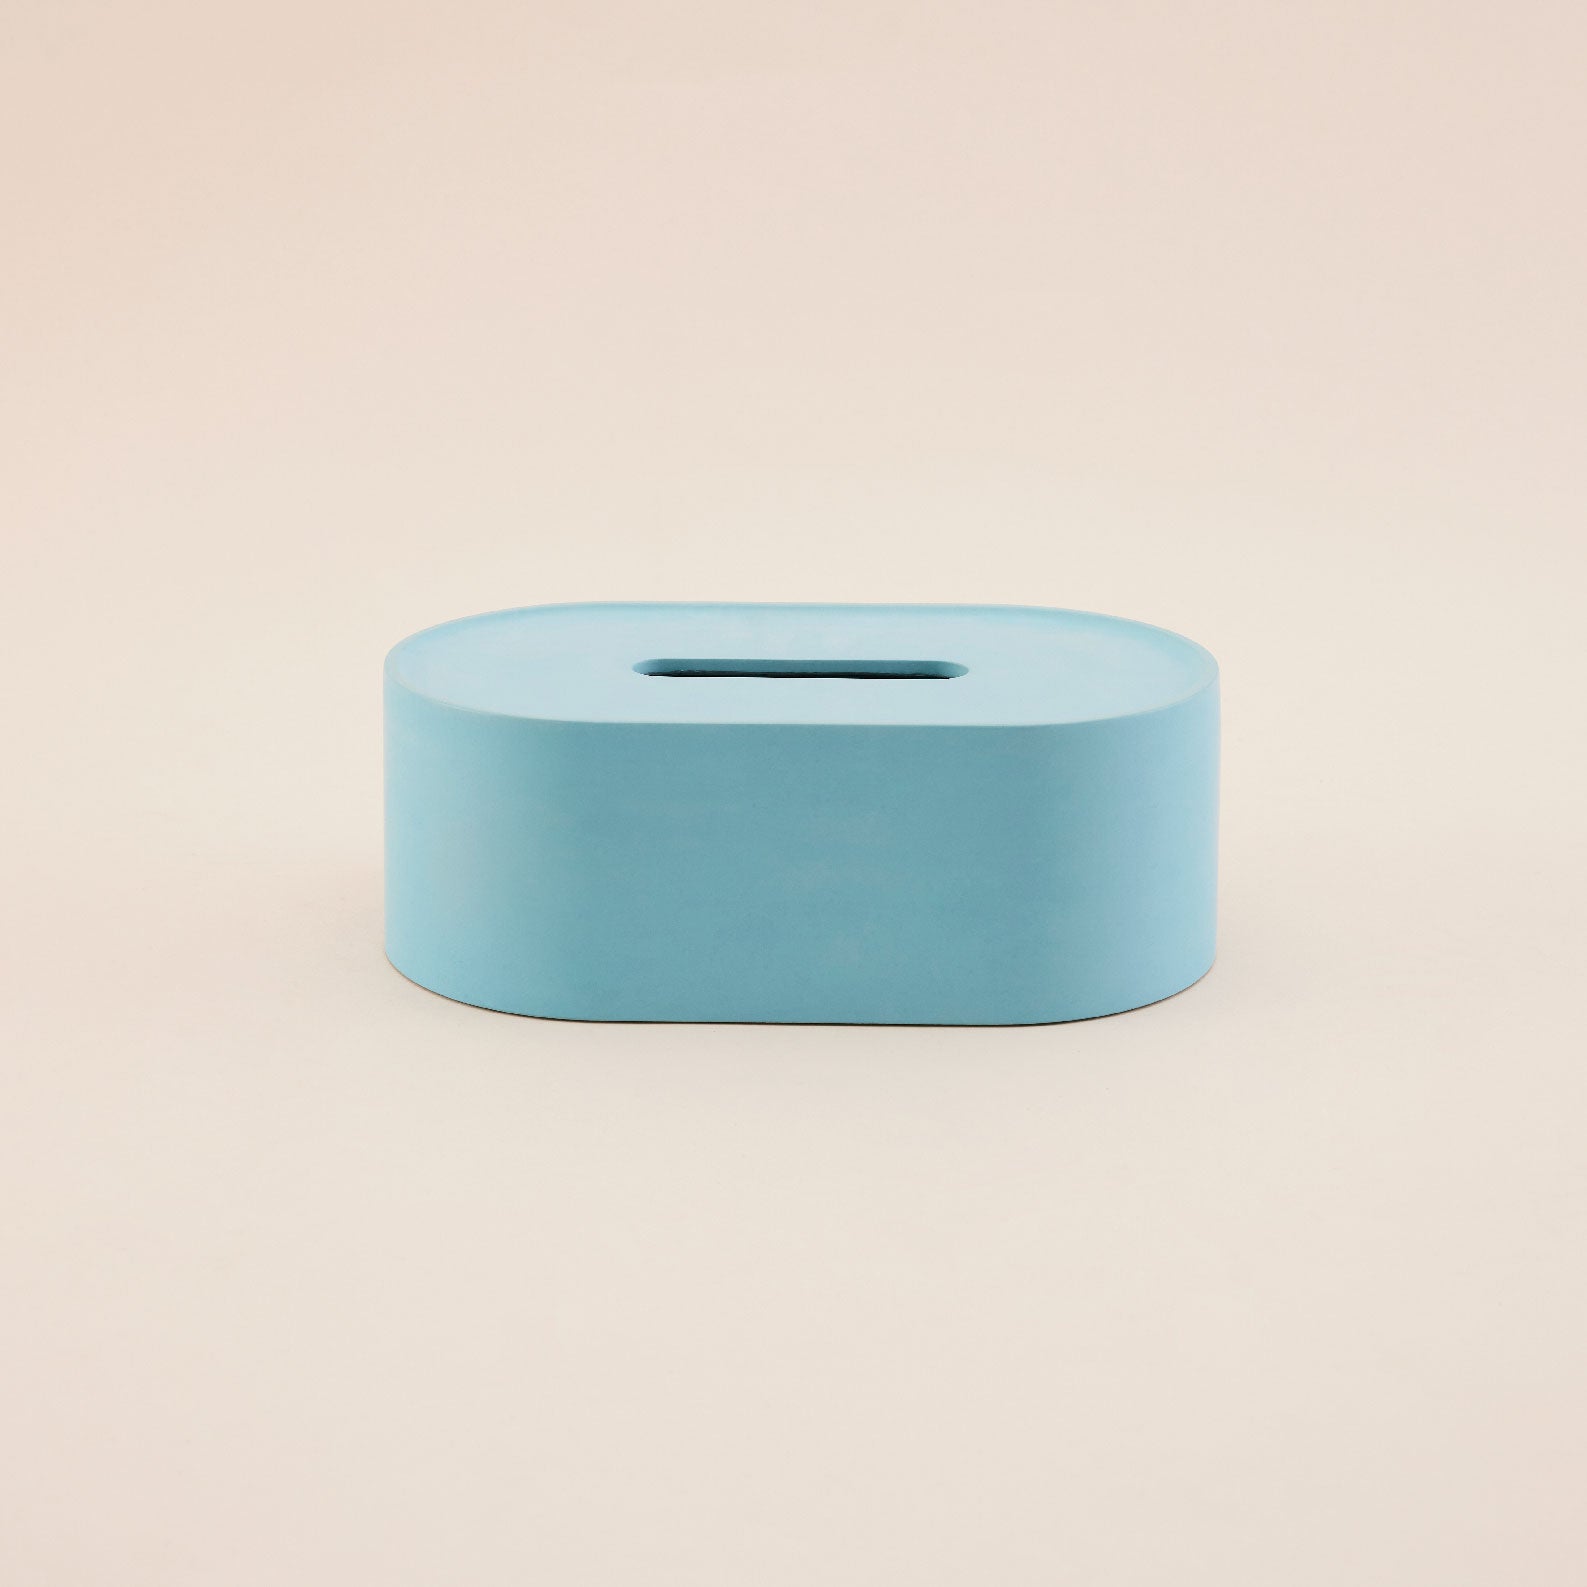 Blue Rounded Concrete Tissue Box |  กล่องใส่กระดาษทิชชู แบบแผ่น ทรงรี